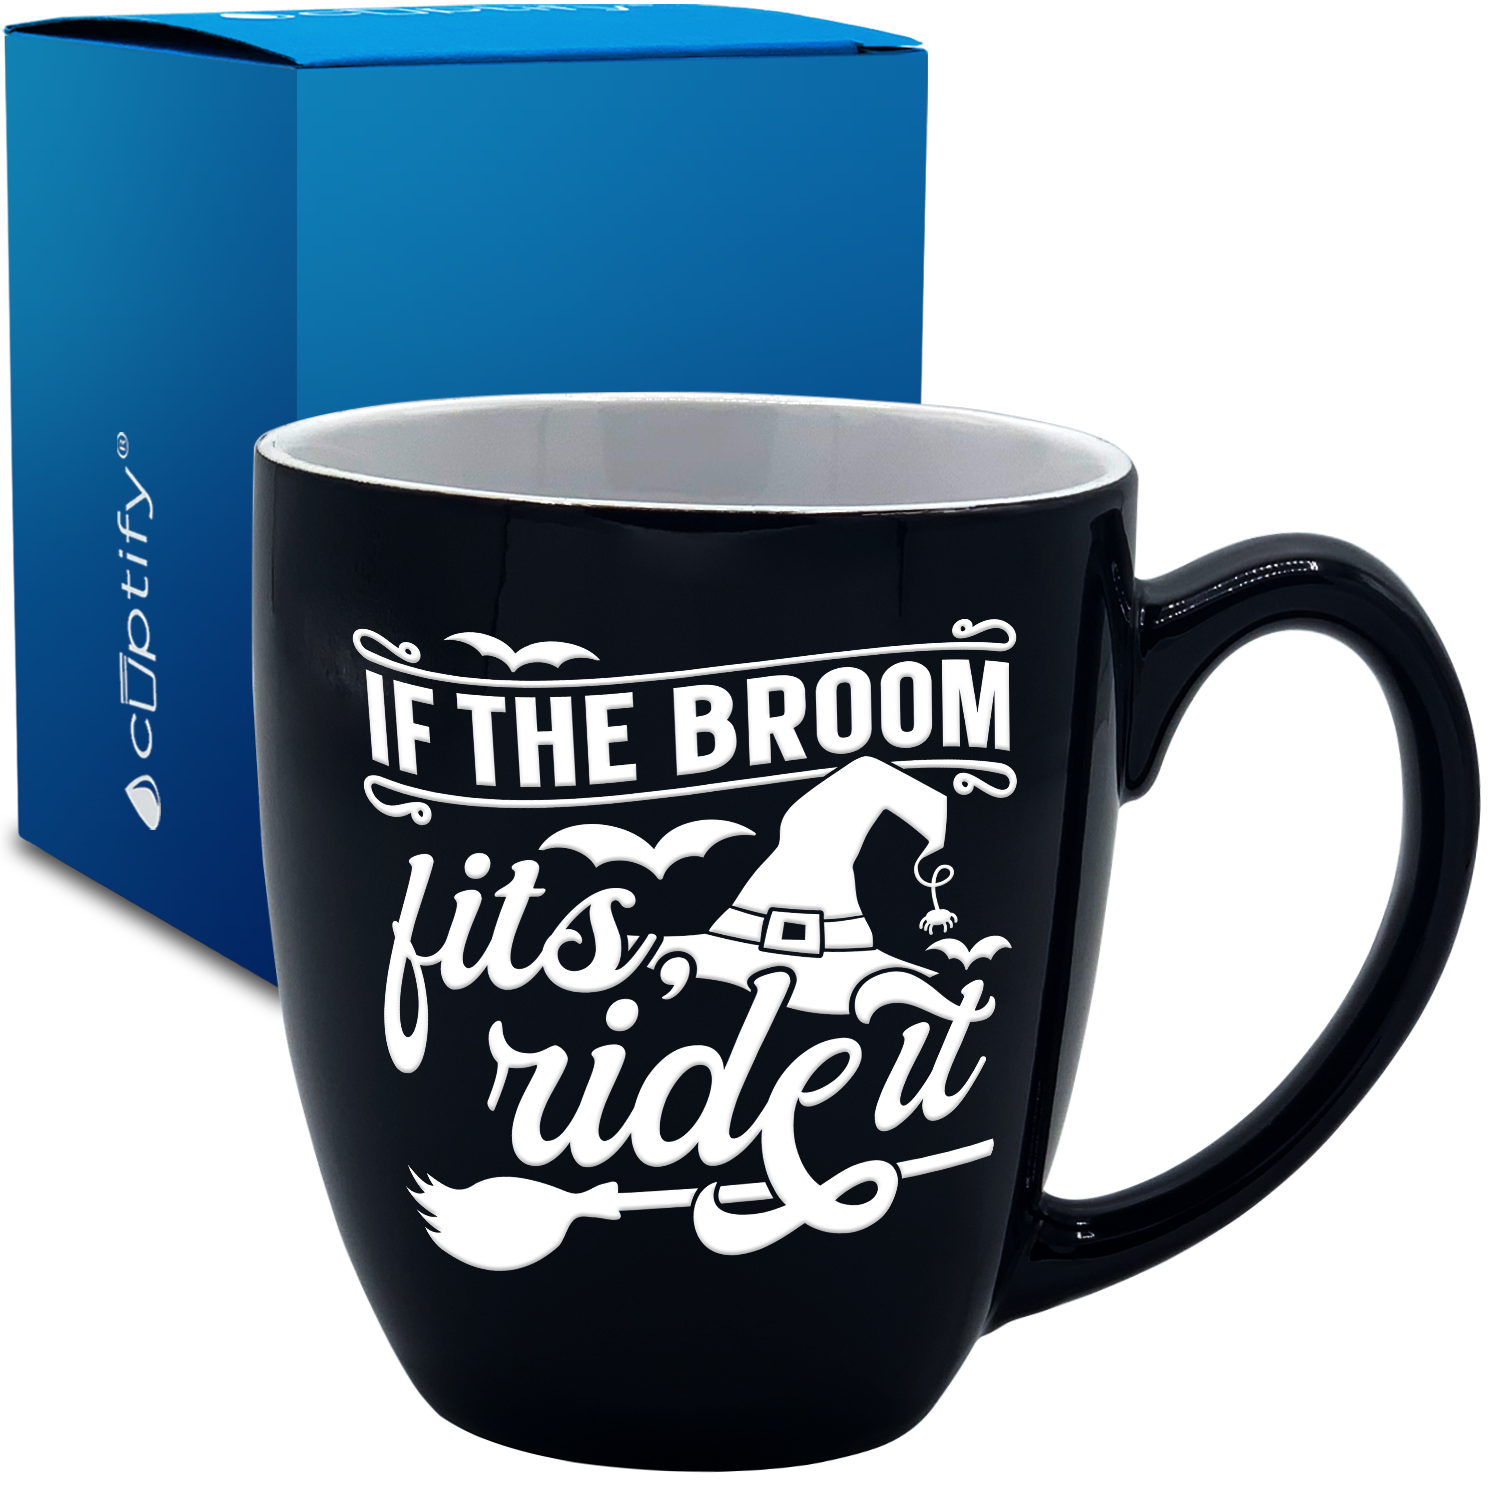 If the Broom Fits Ride it on Black 16oz Halloween Bistro Coffee Mug